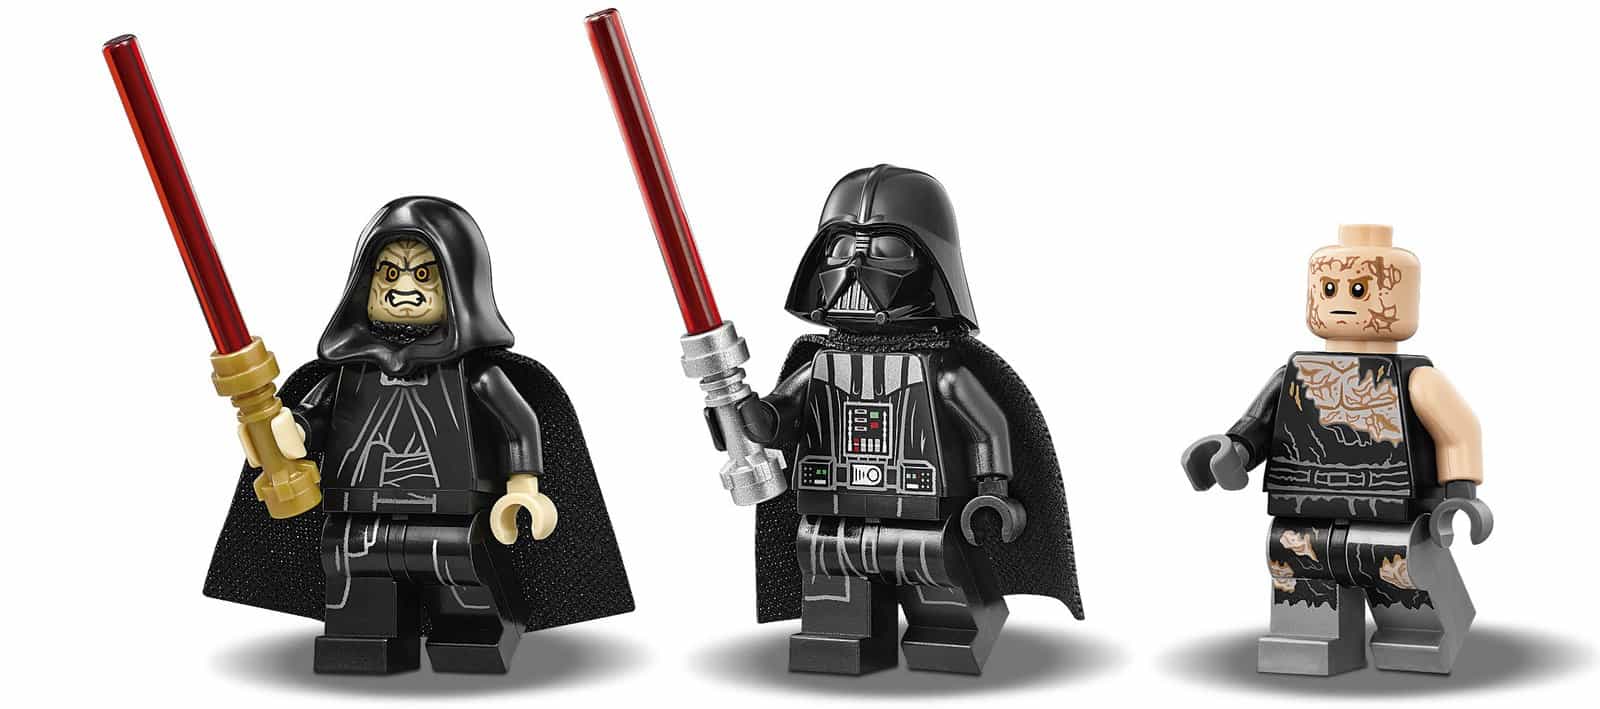 rare lego star wars minifigures